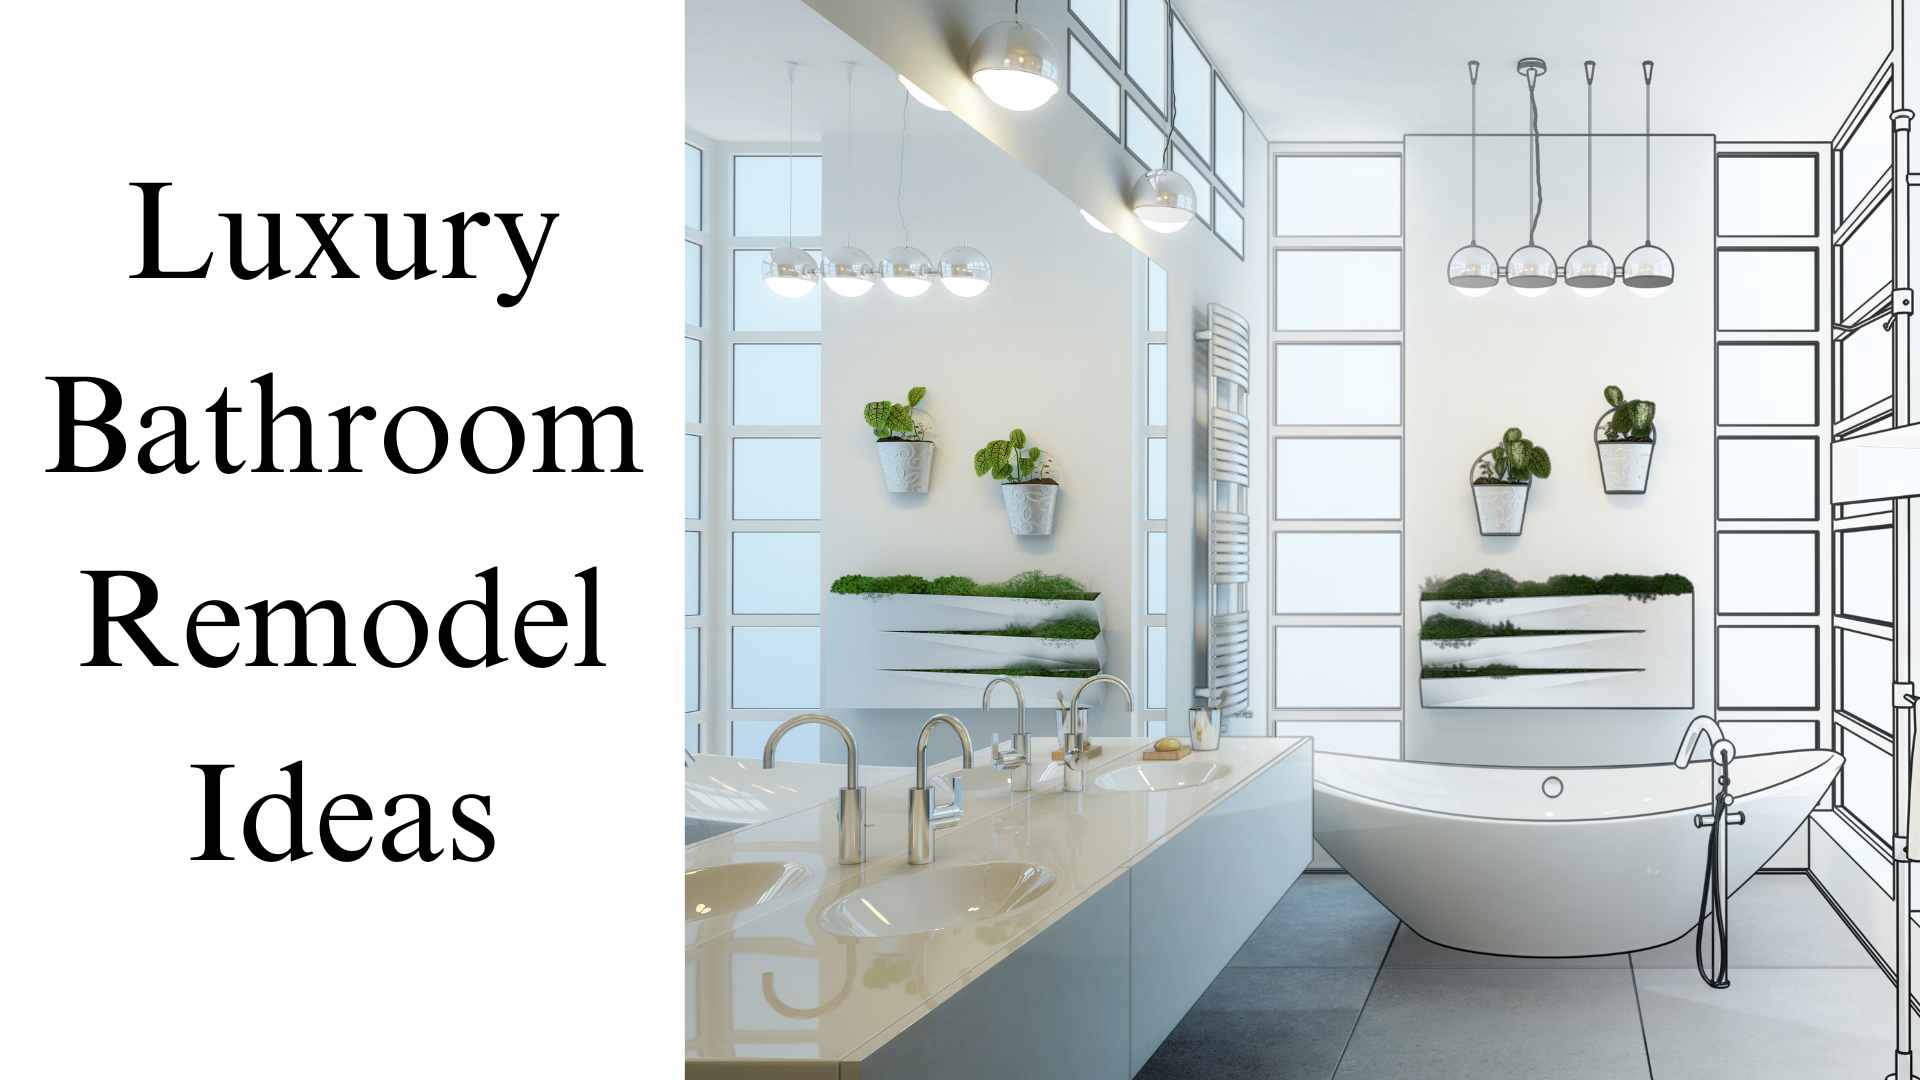 Design and Planning Luxury Bathrooms